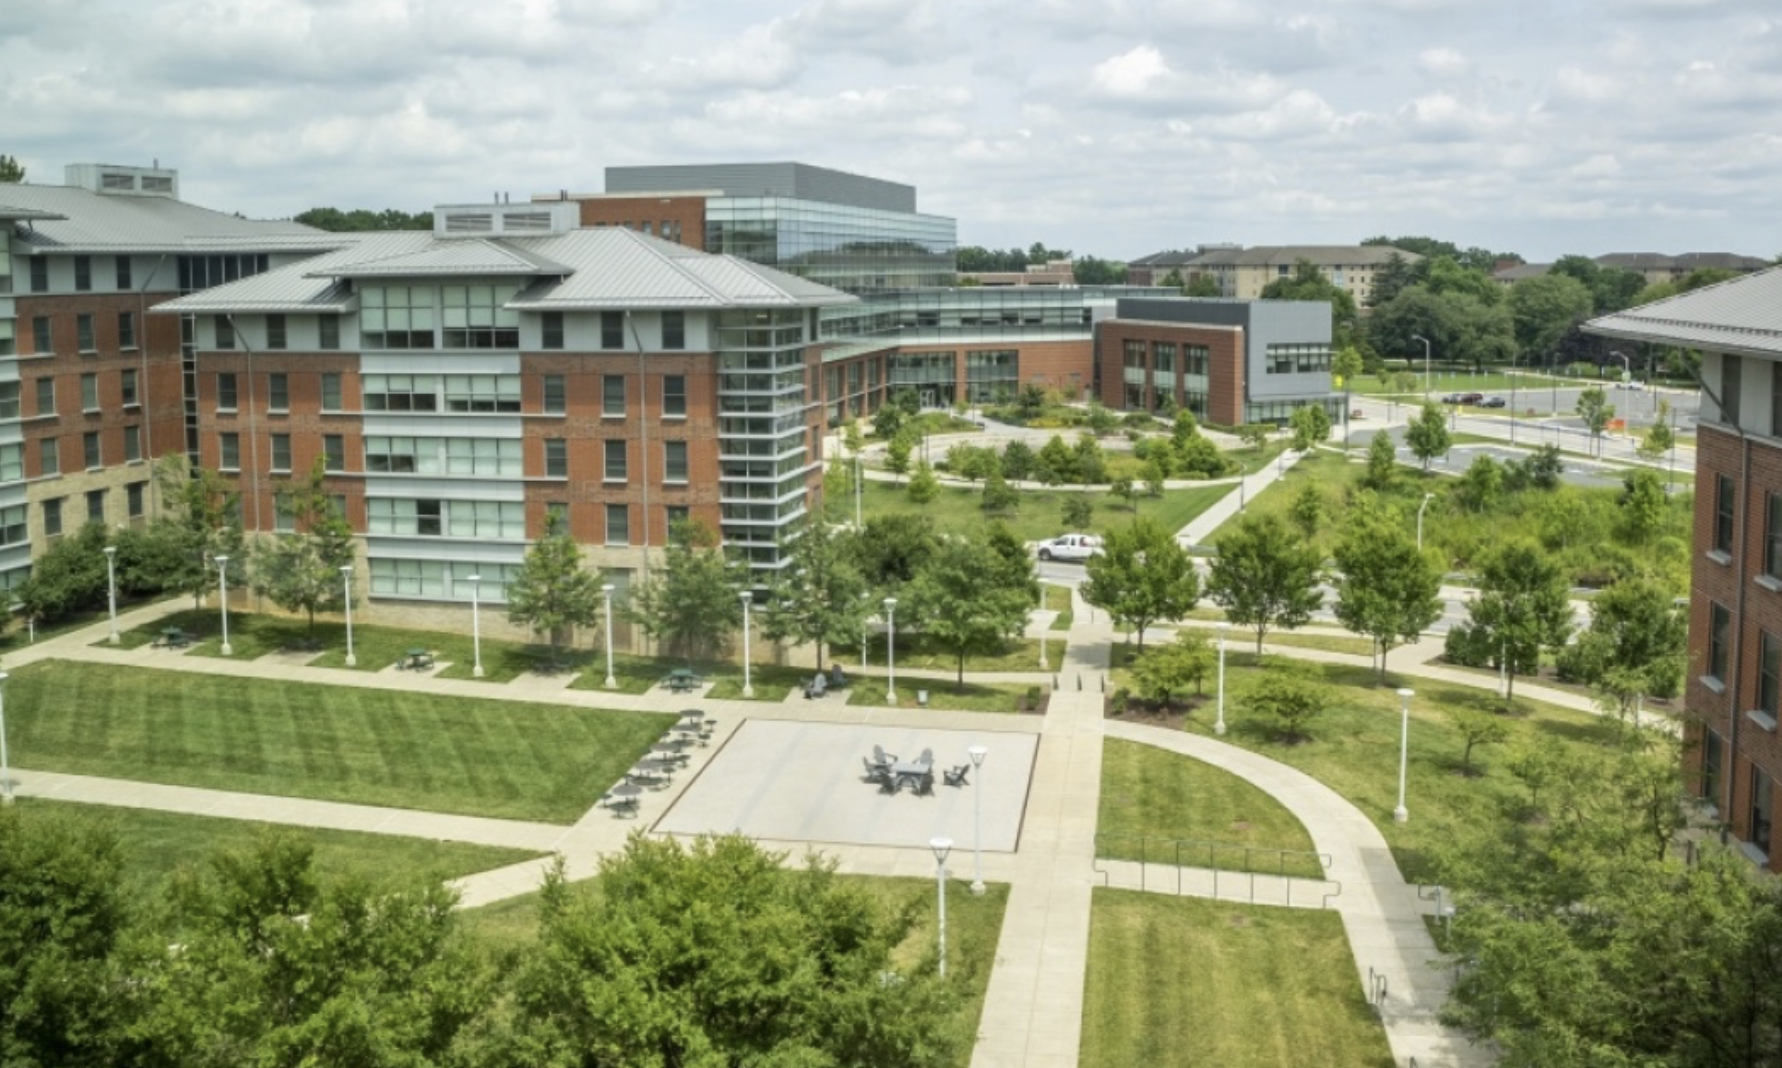 Aerial image of George Mason University Campus